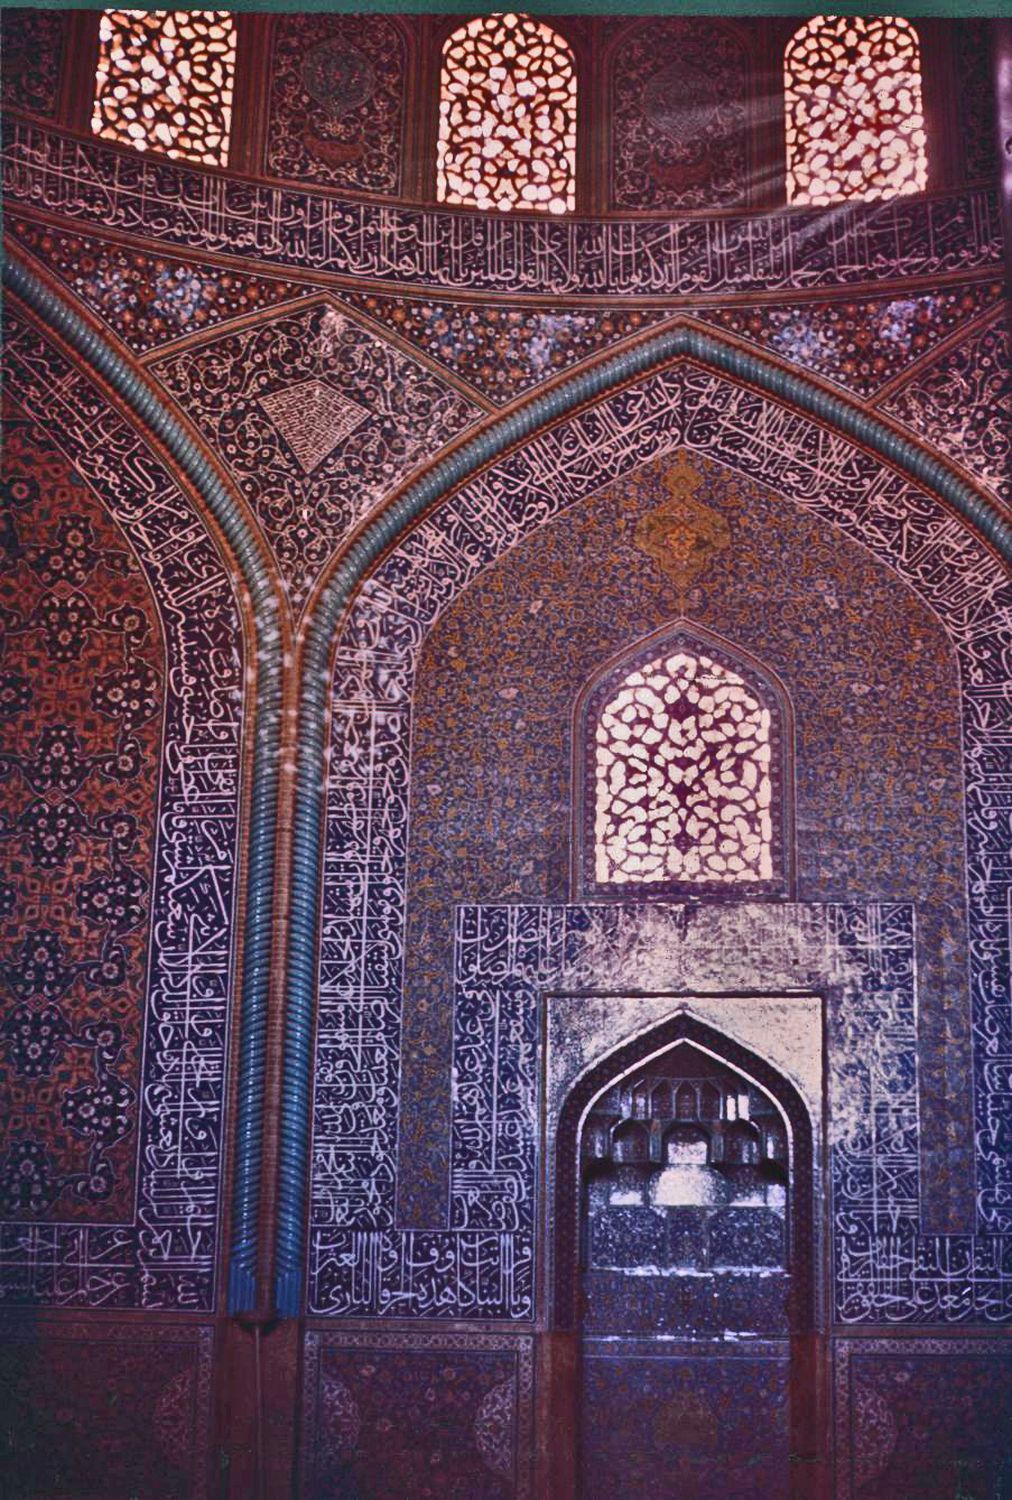 Prayer hall, view of mihrab.